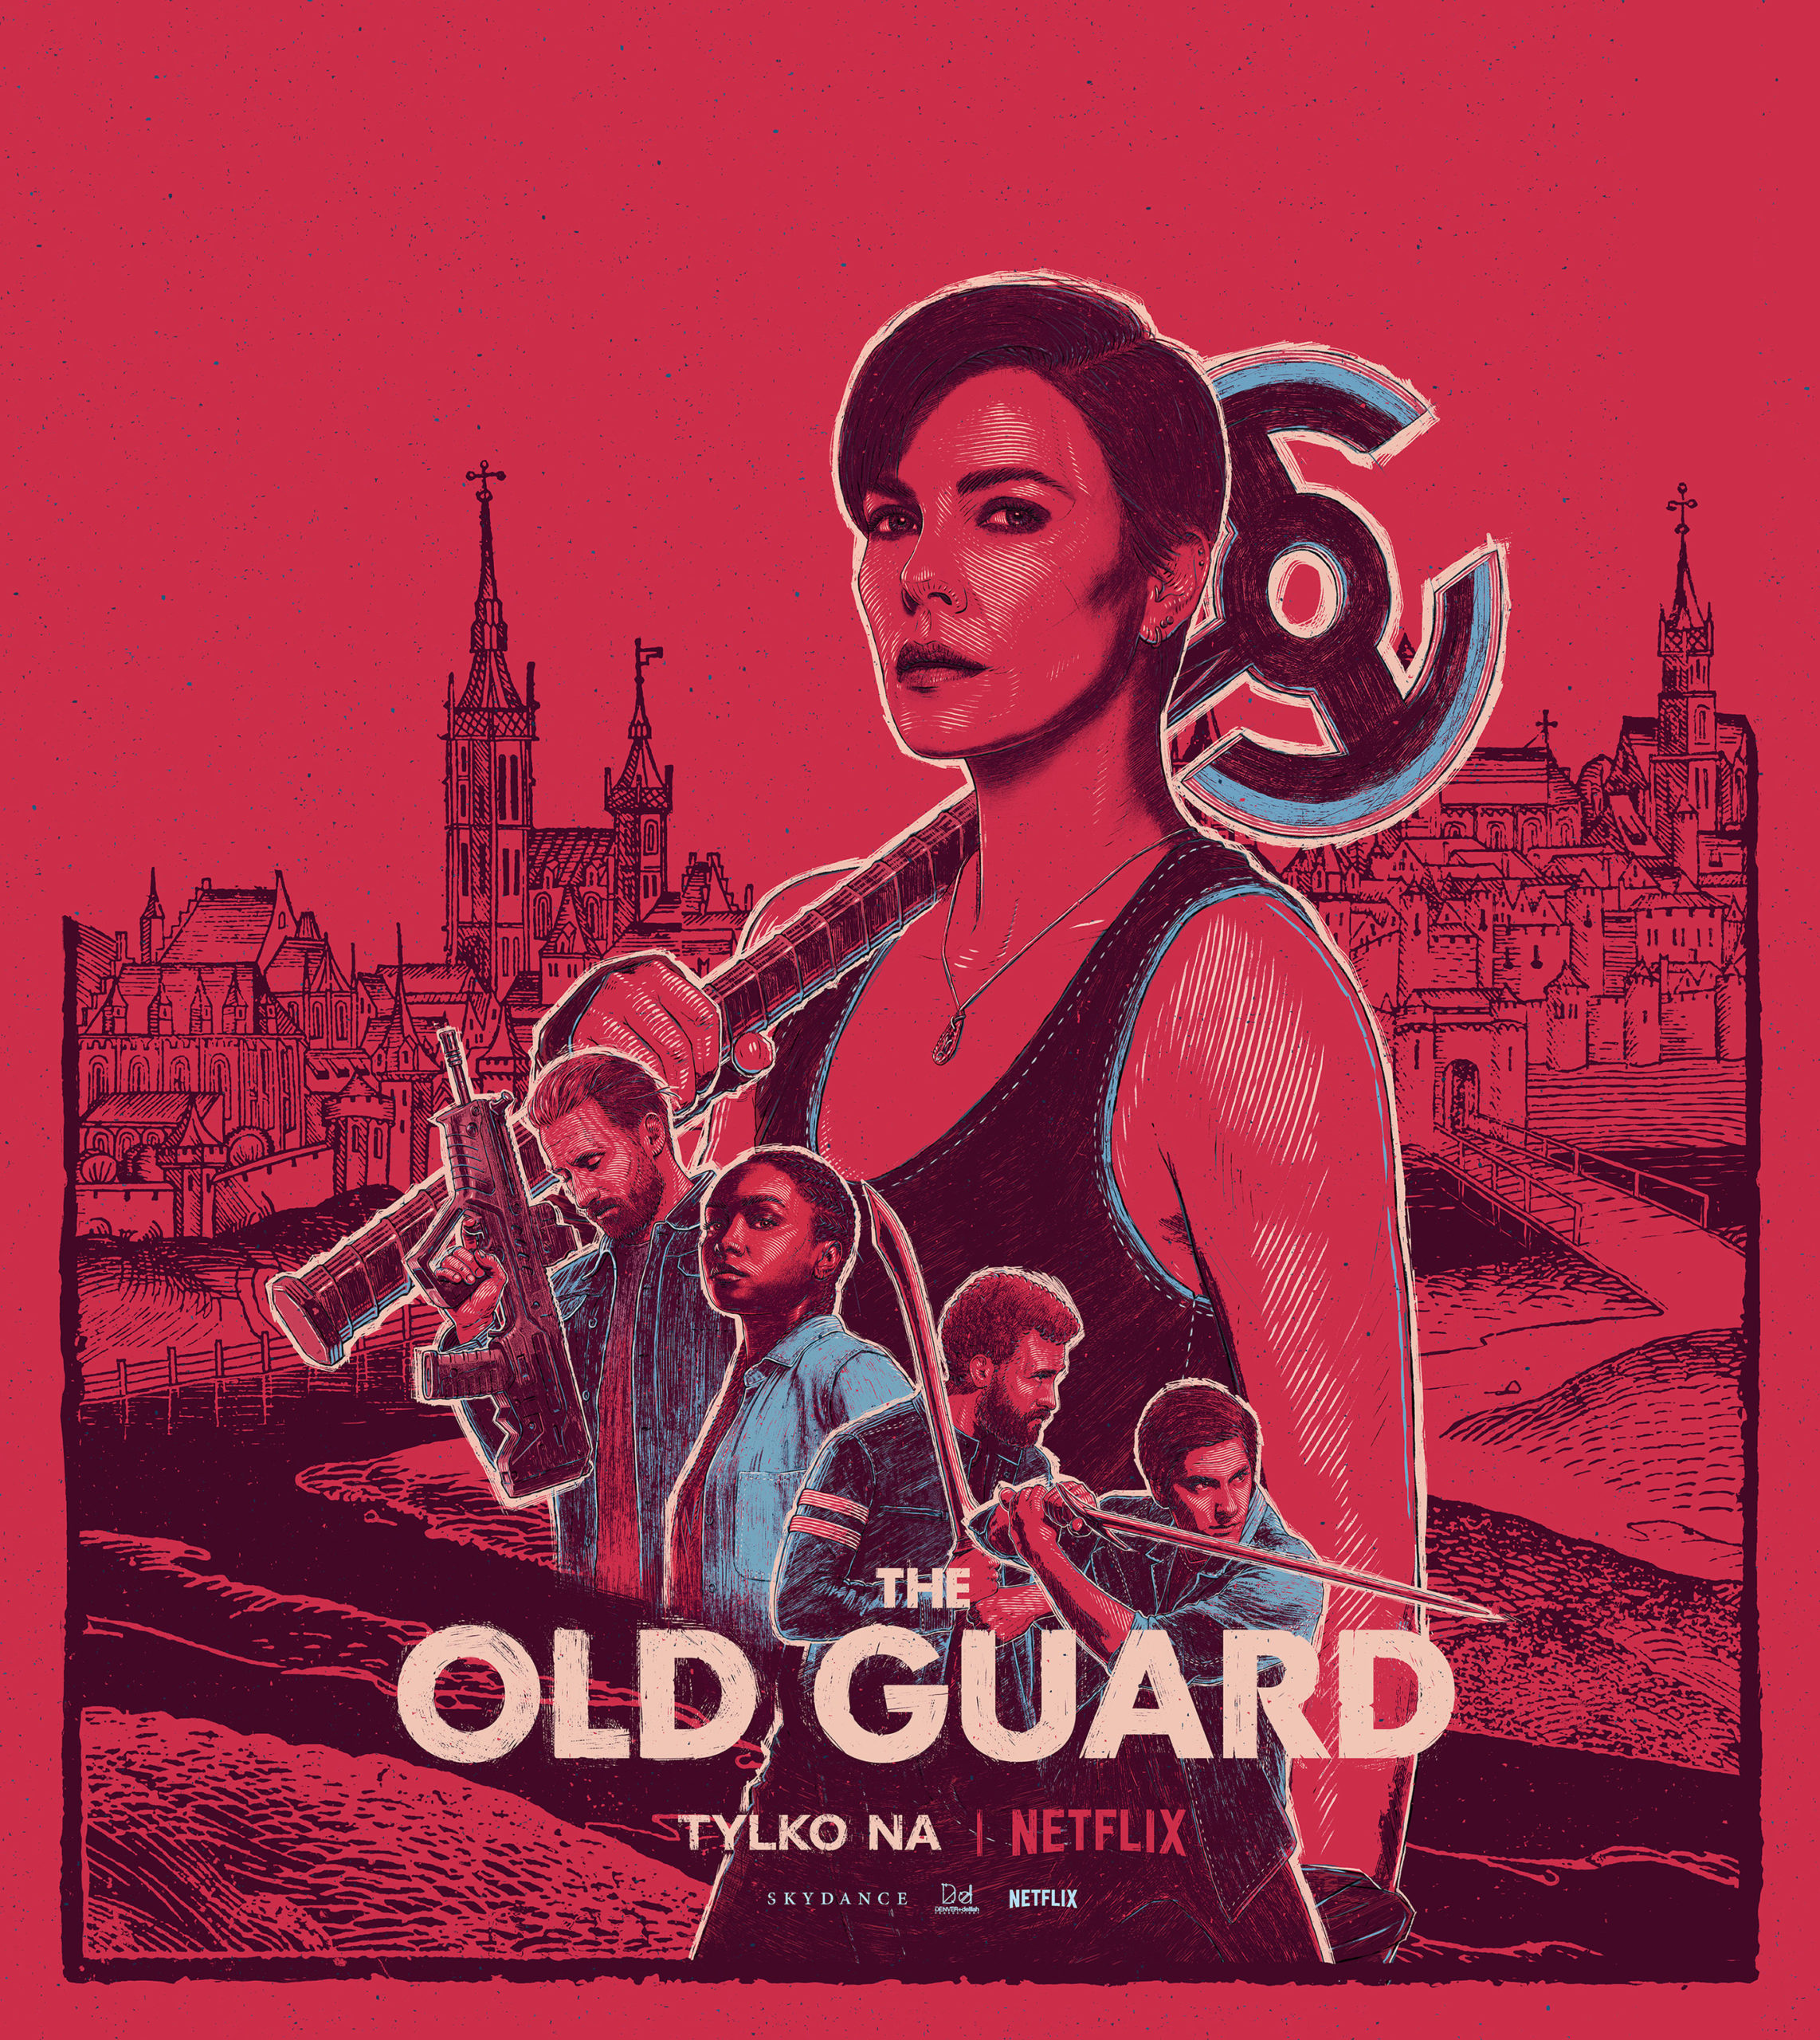 Bartosz Kosowski's artwork for The Old Guard. (Image: Netflix/Bartosz Kosowski)